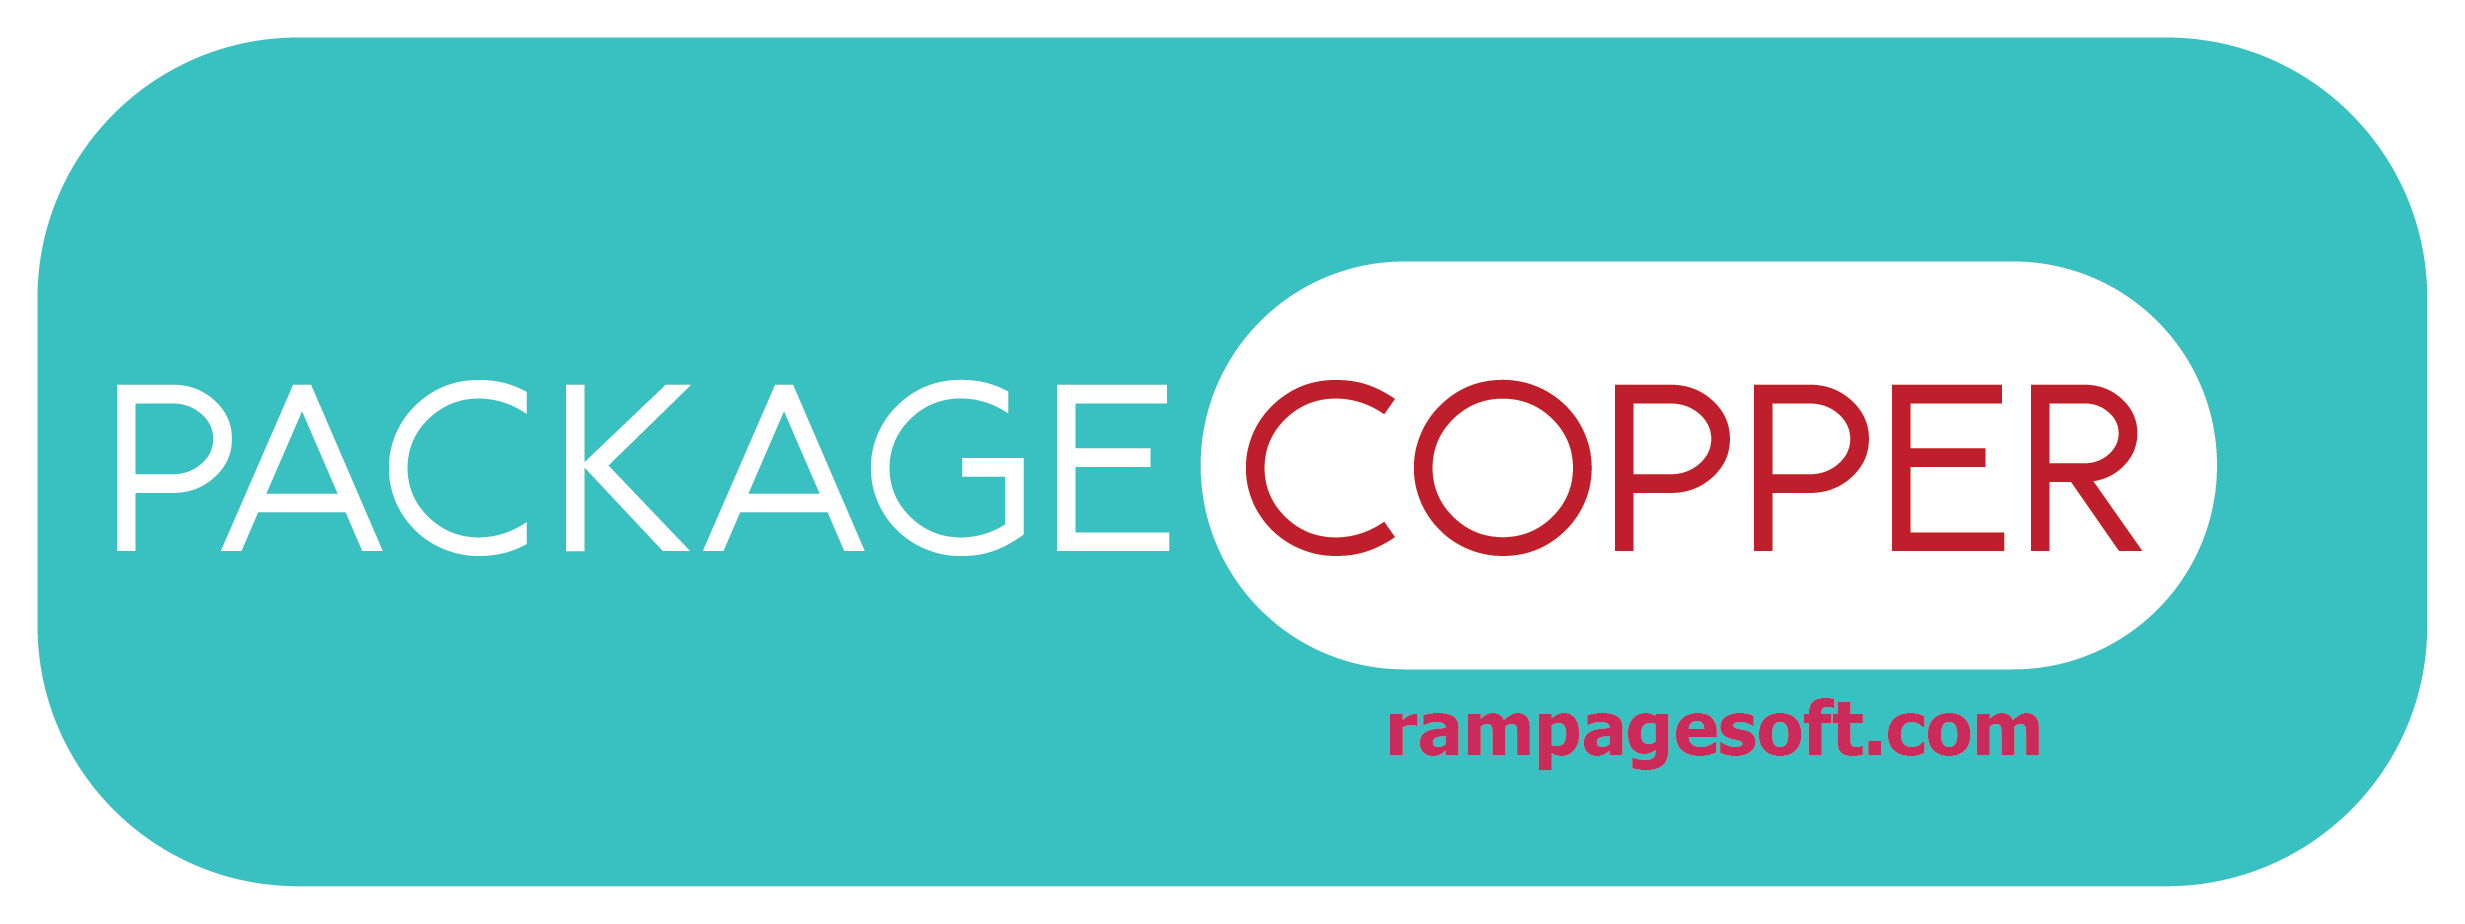 rampagesoft  Package copper Website Design